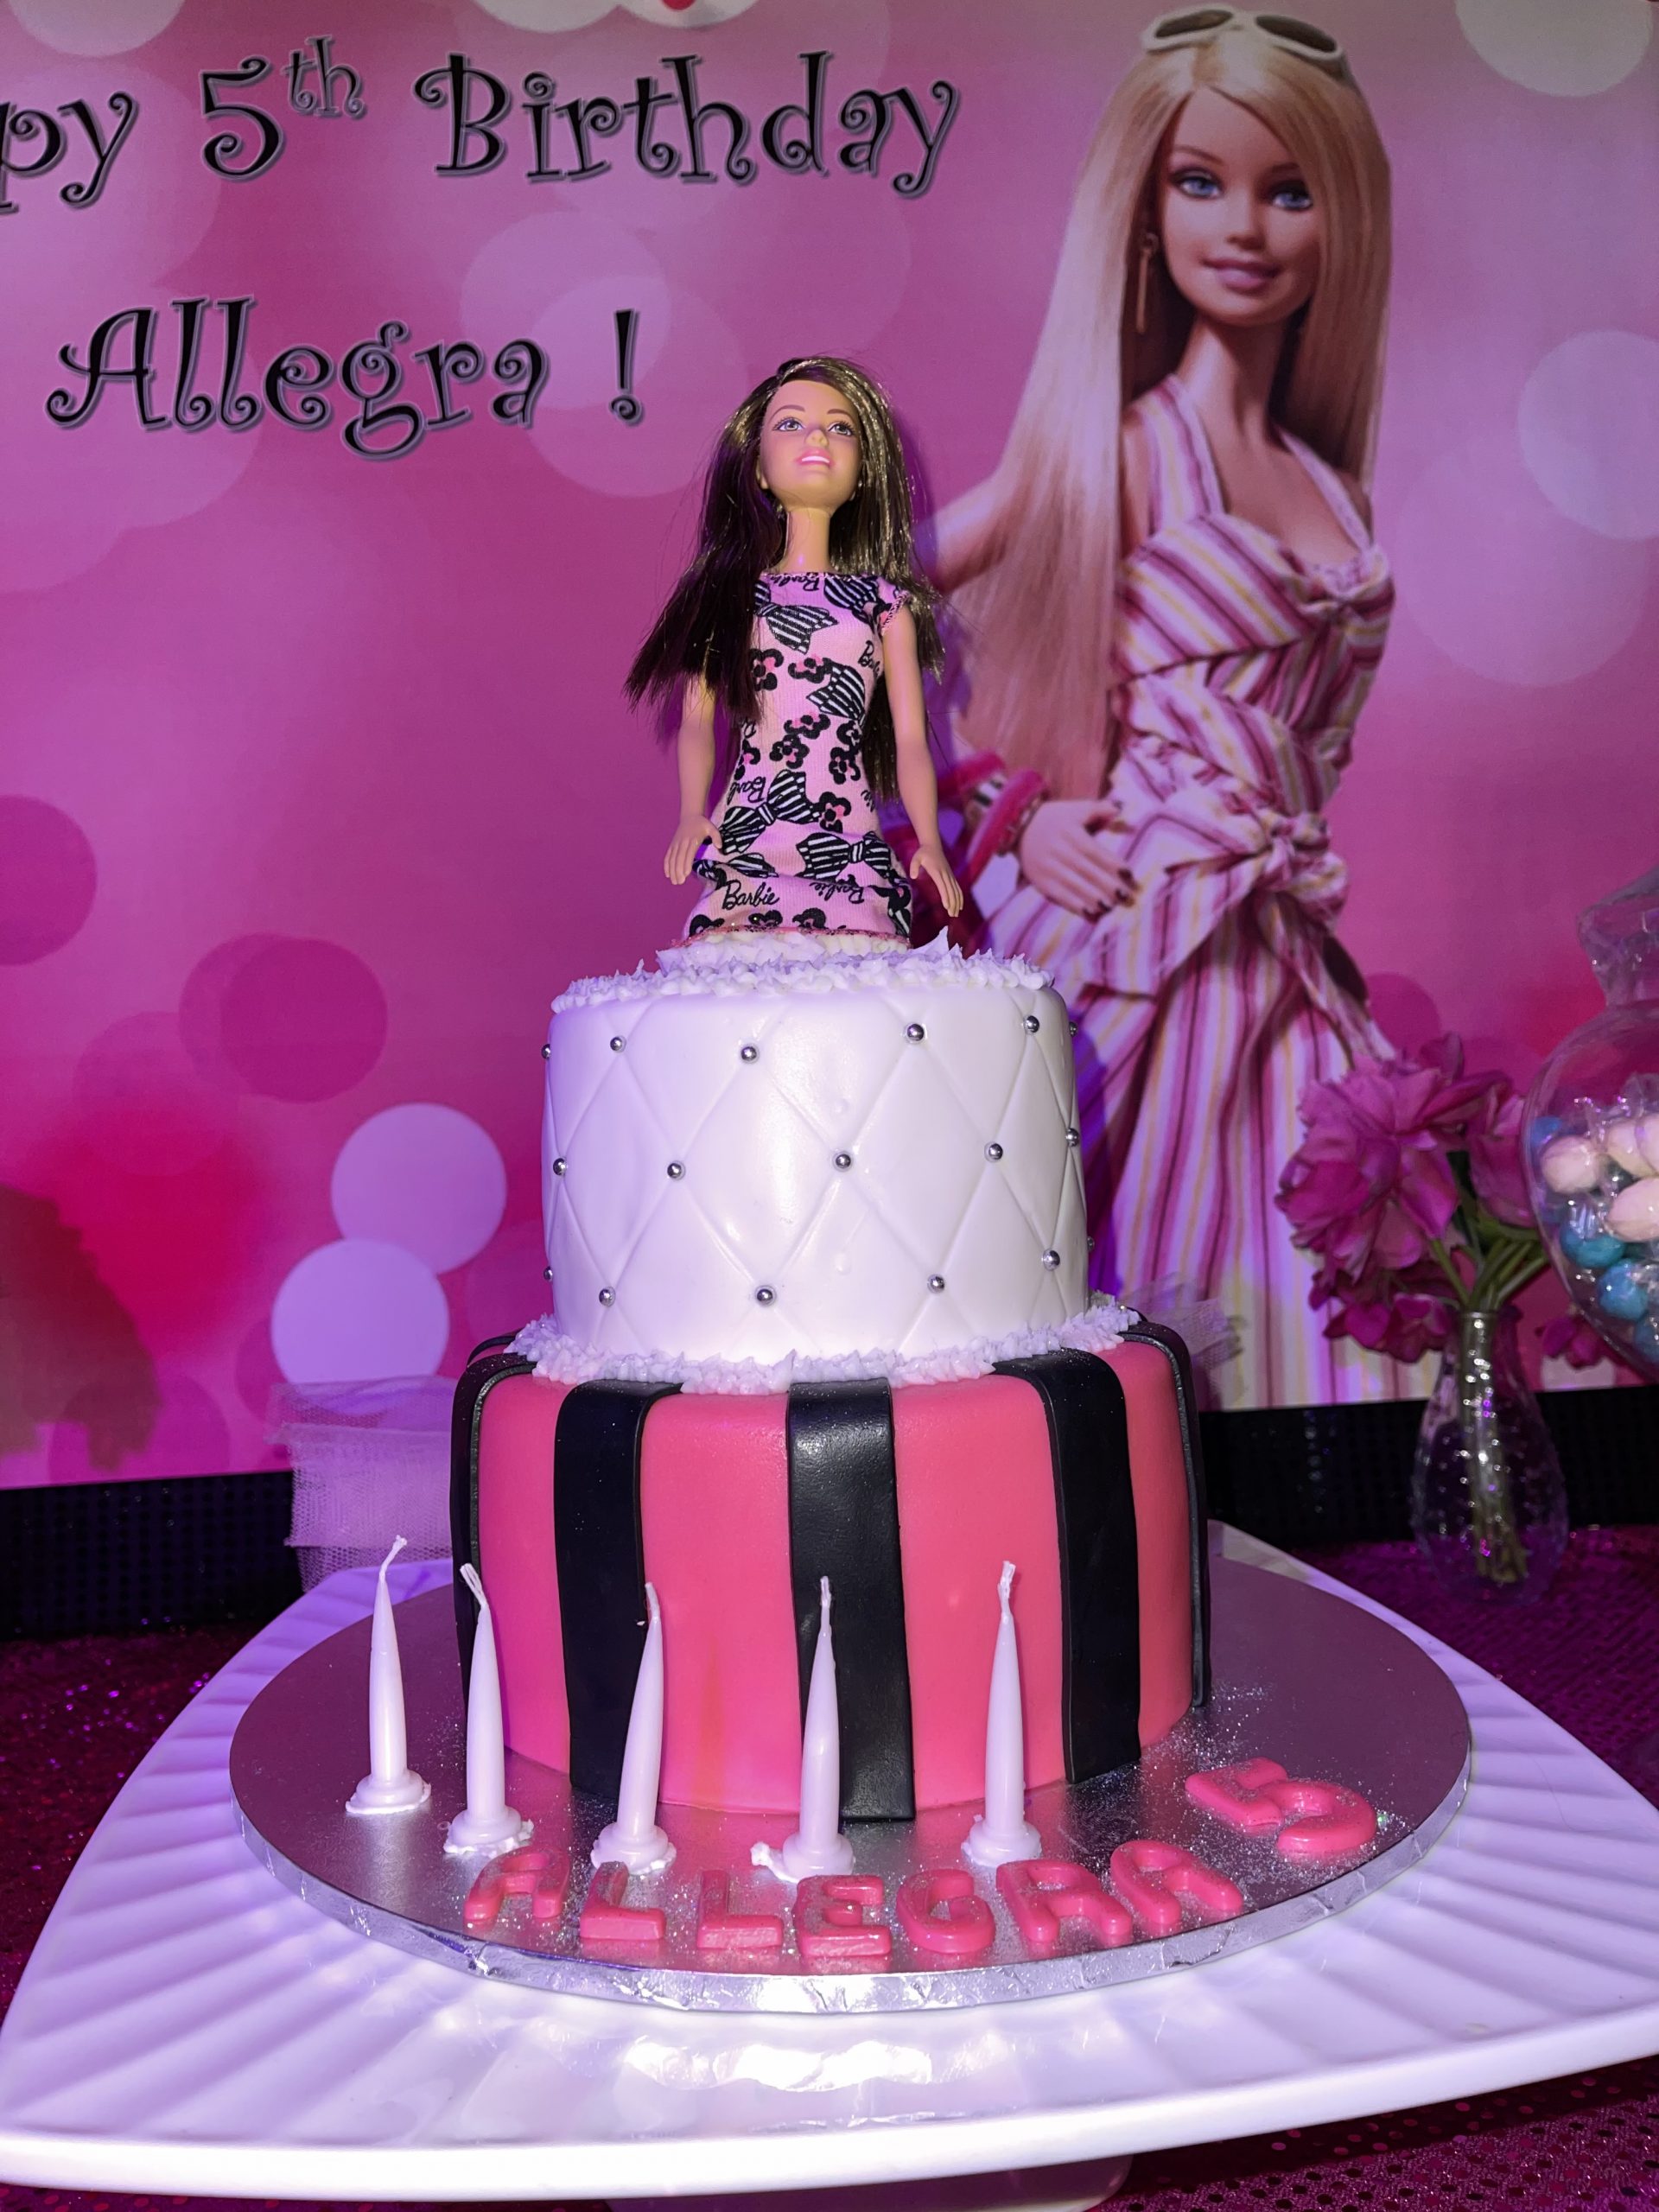 Barbie Doll Cake, Packaging Size: Single, Weight: Minimum 2 Kg Onwards